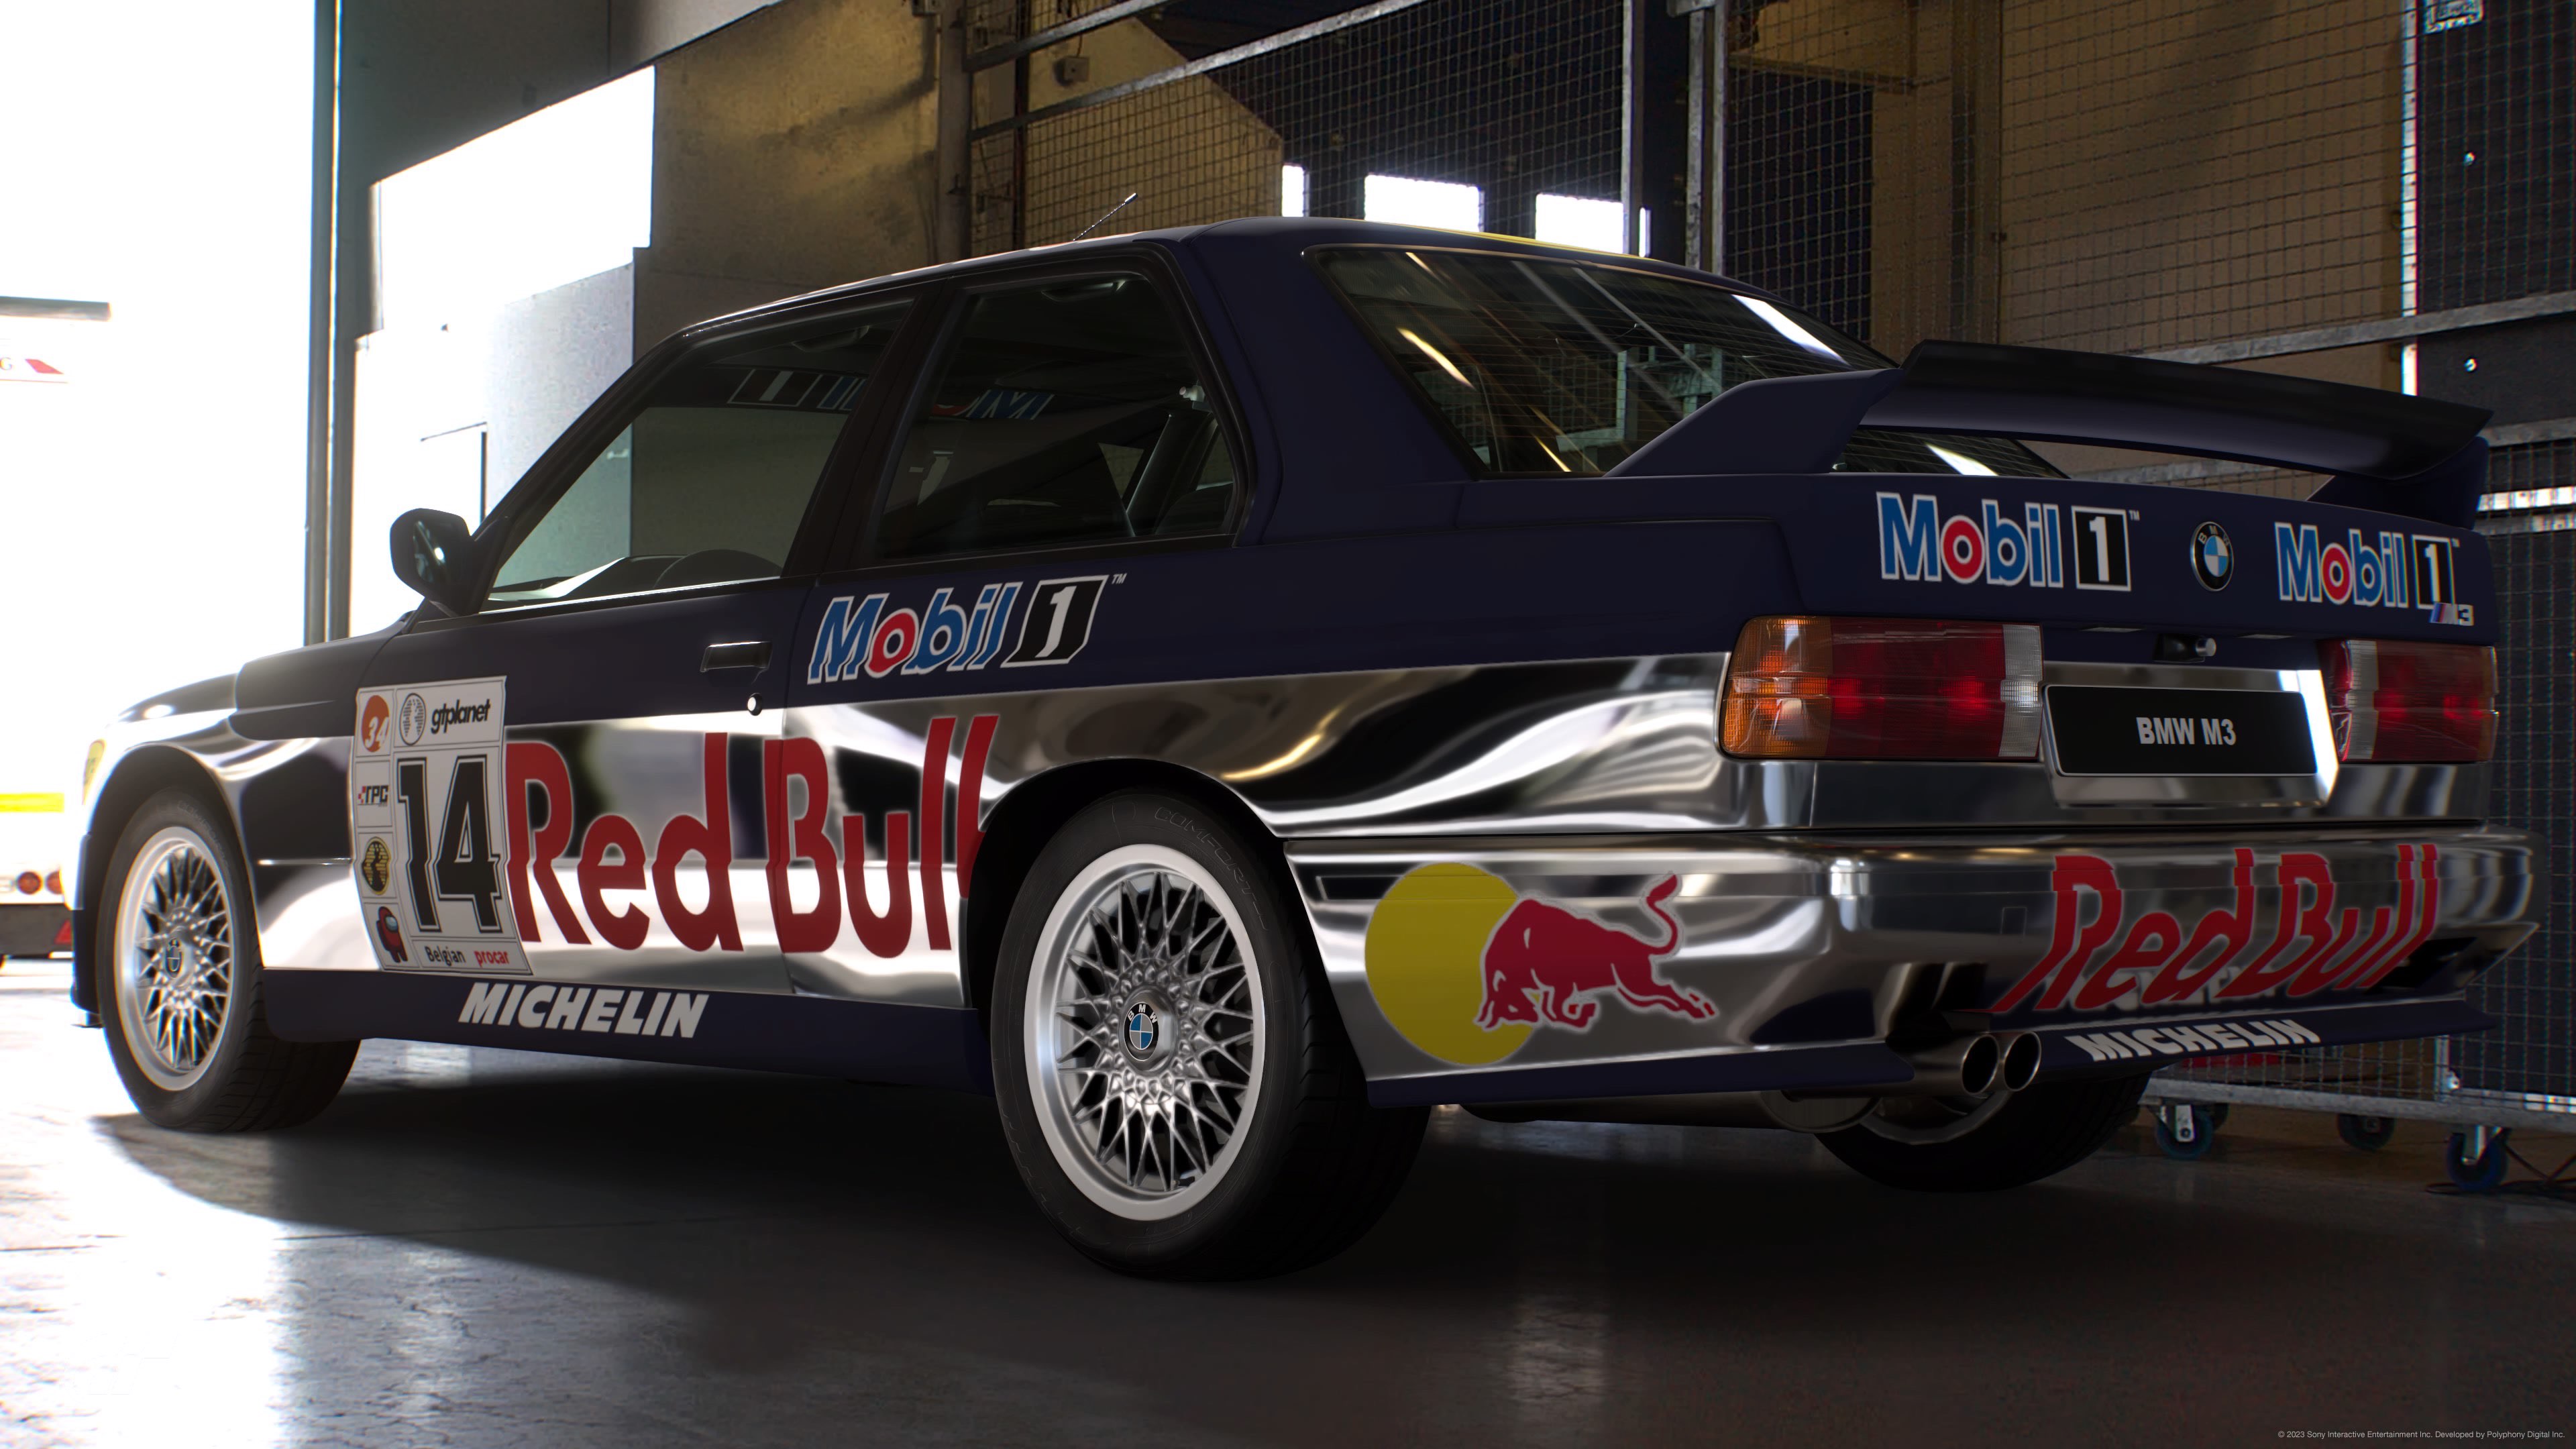 Red Bull BMW Garage